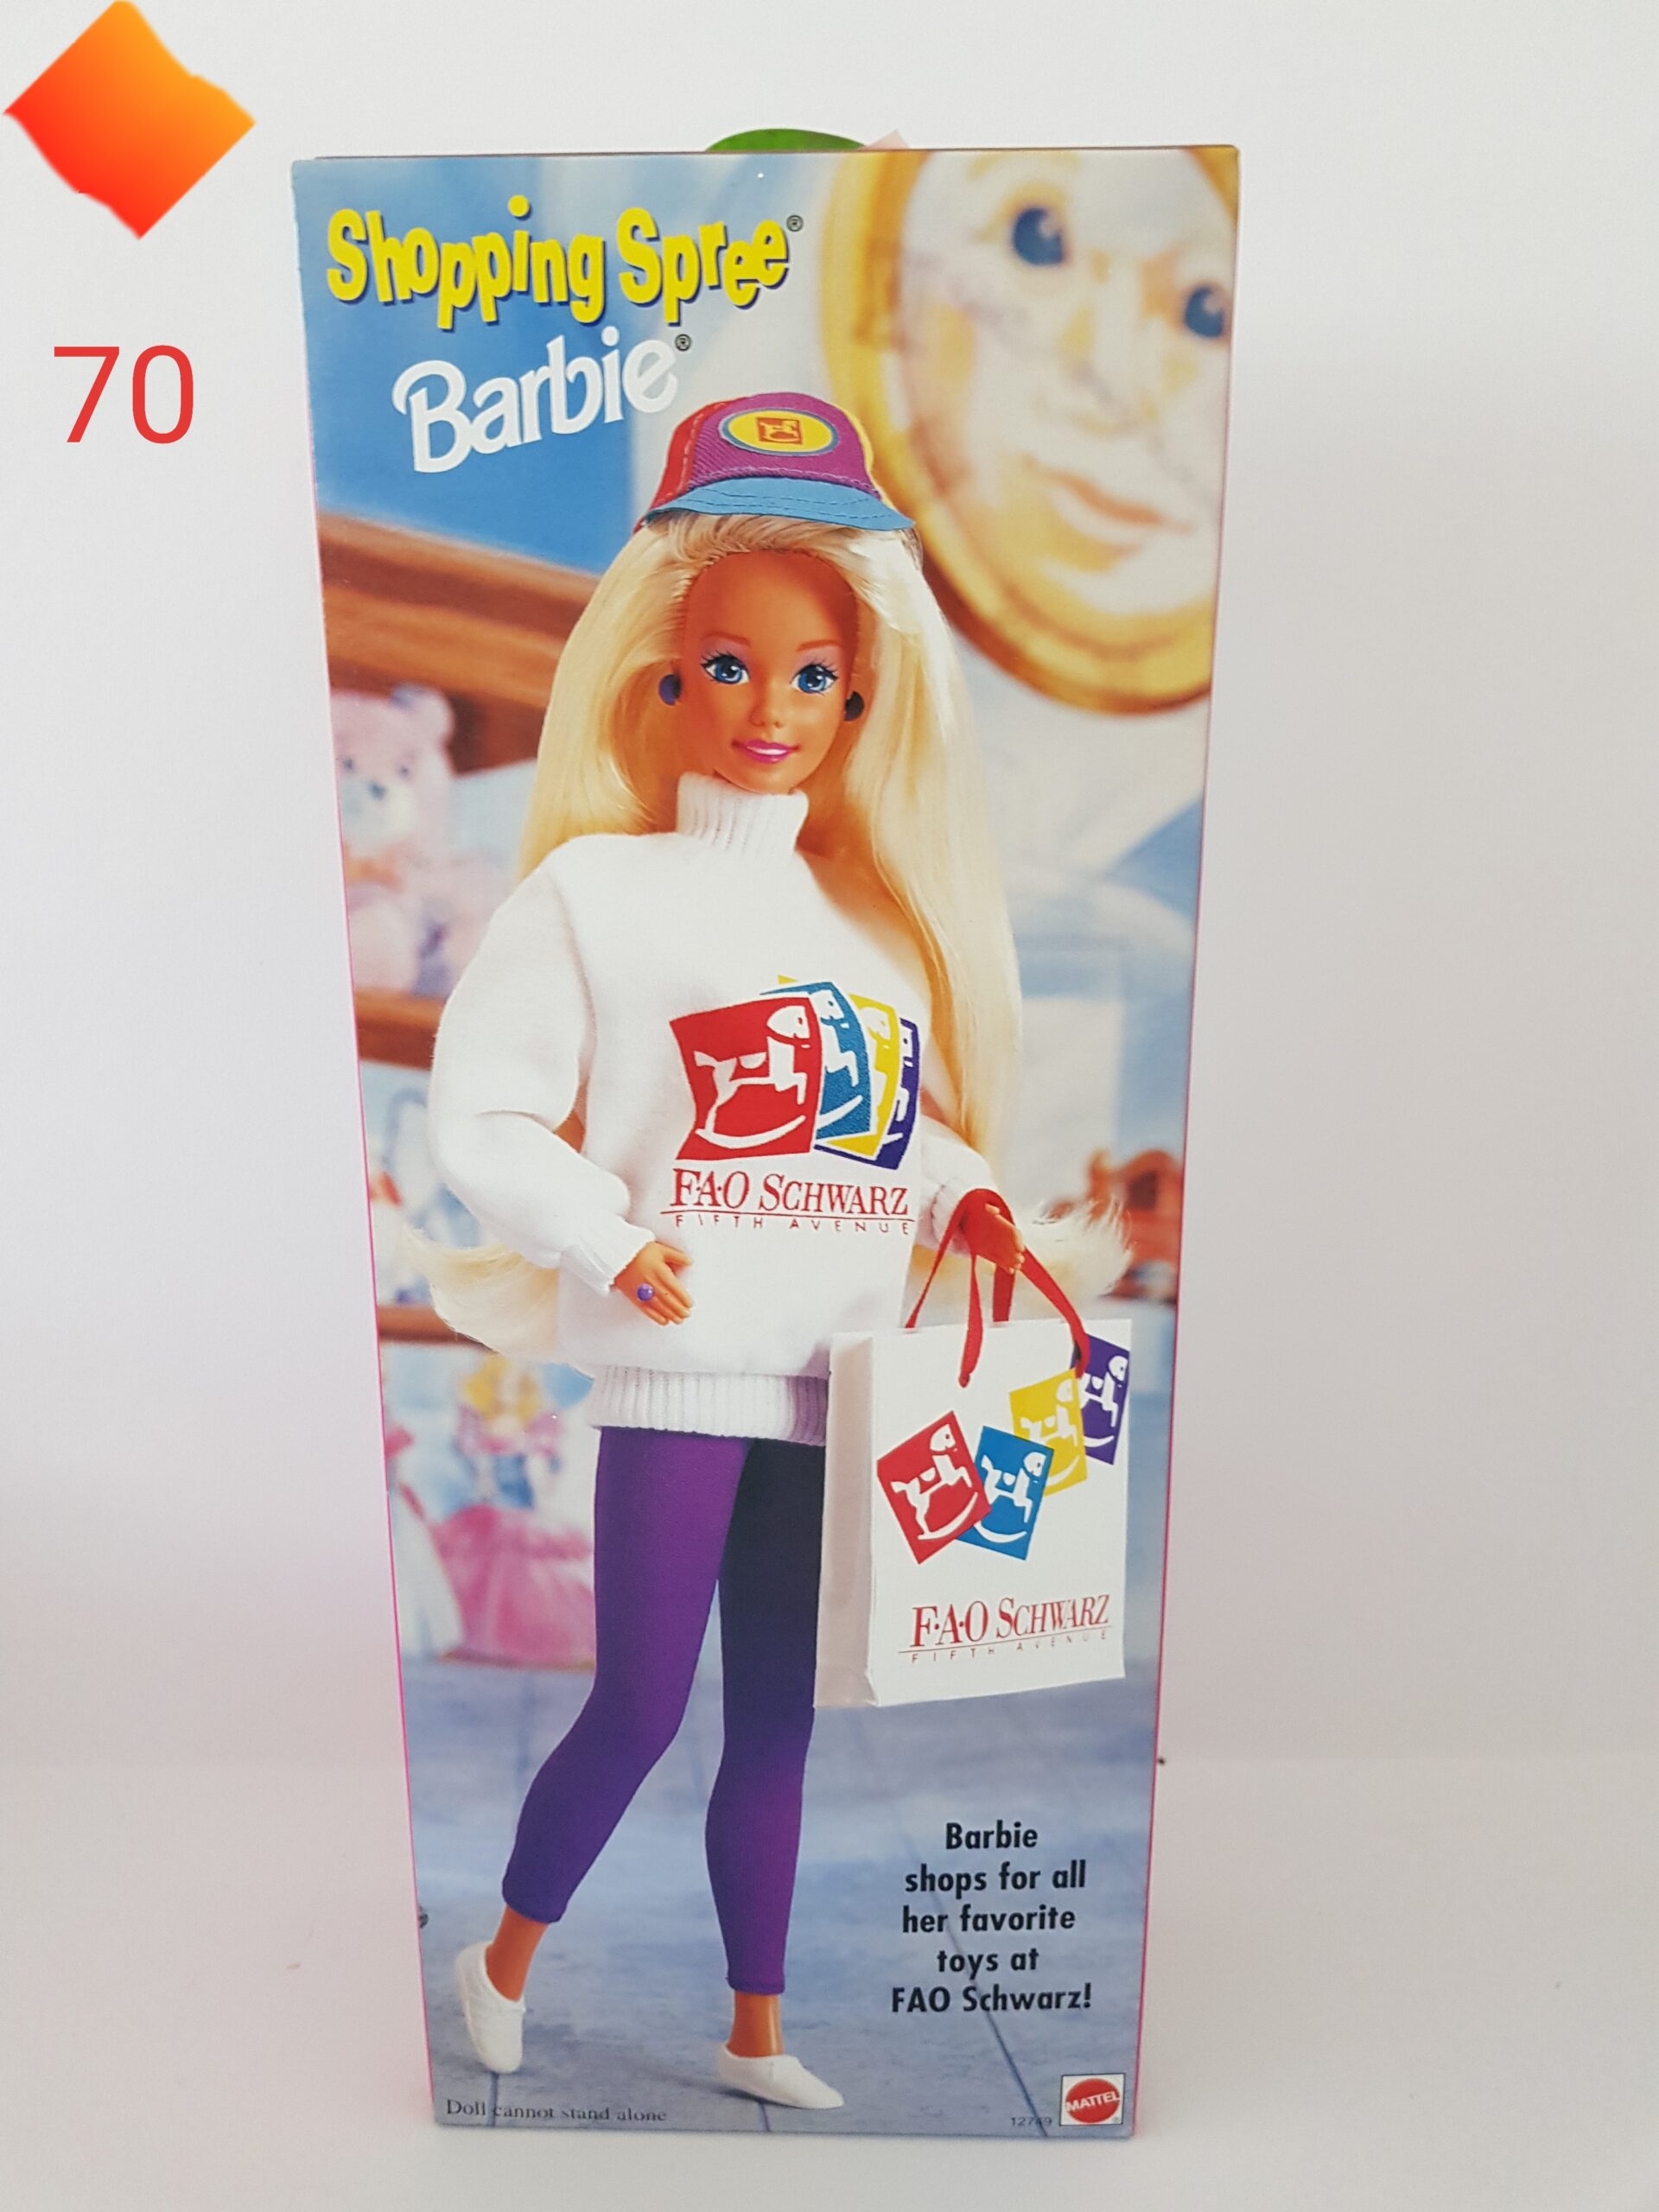 tolv gård Husk Shopping Spree Barbie | ThinkPink